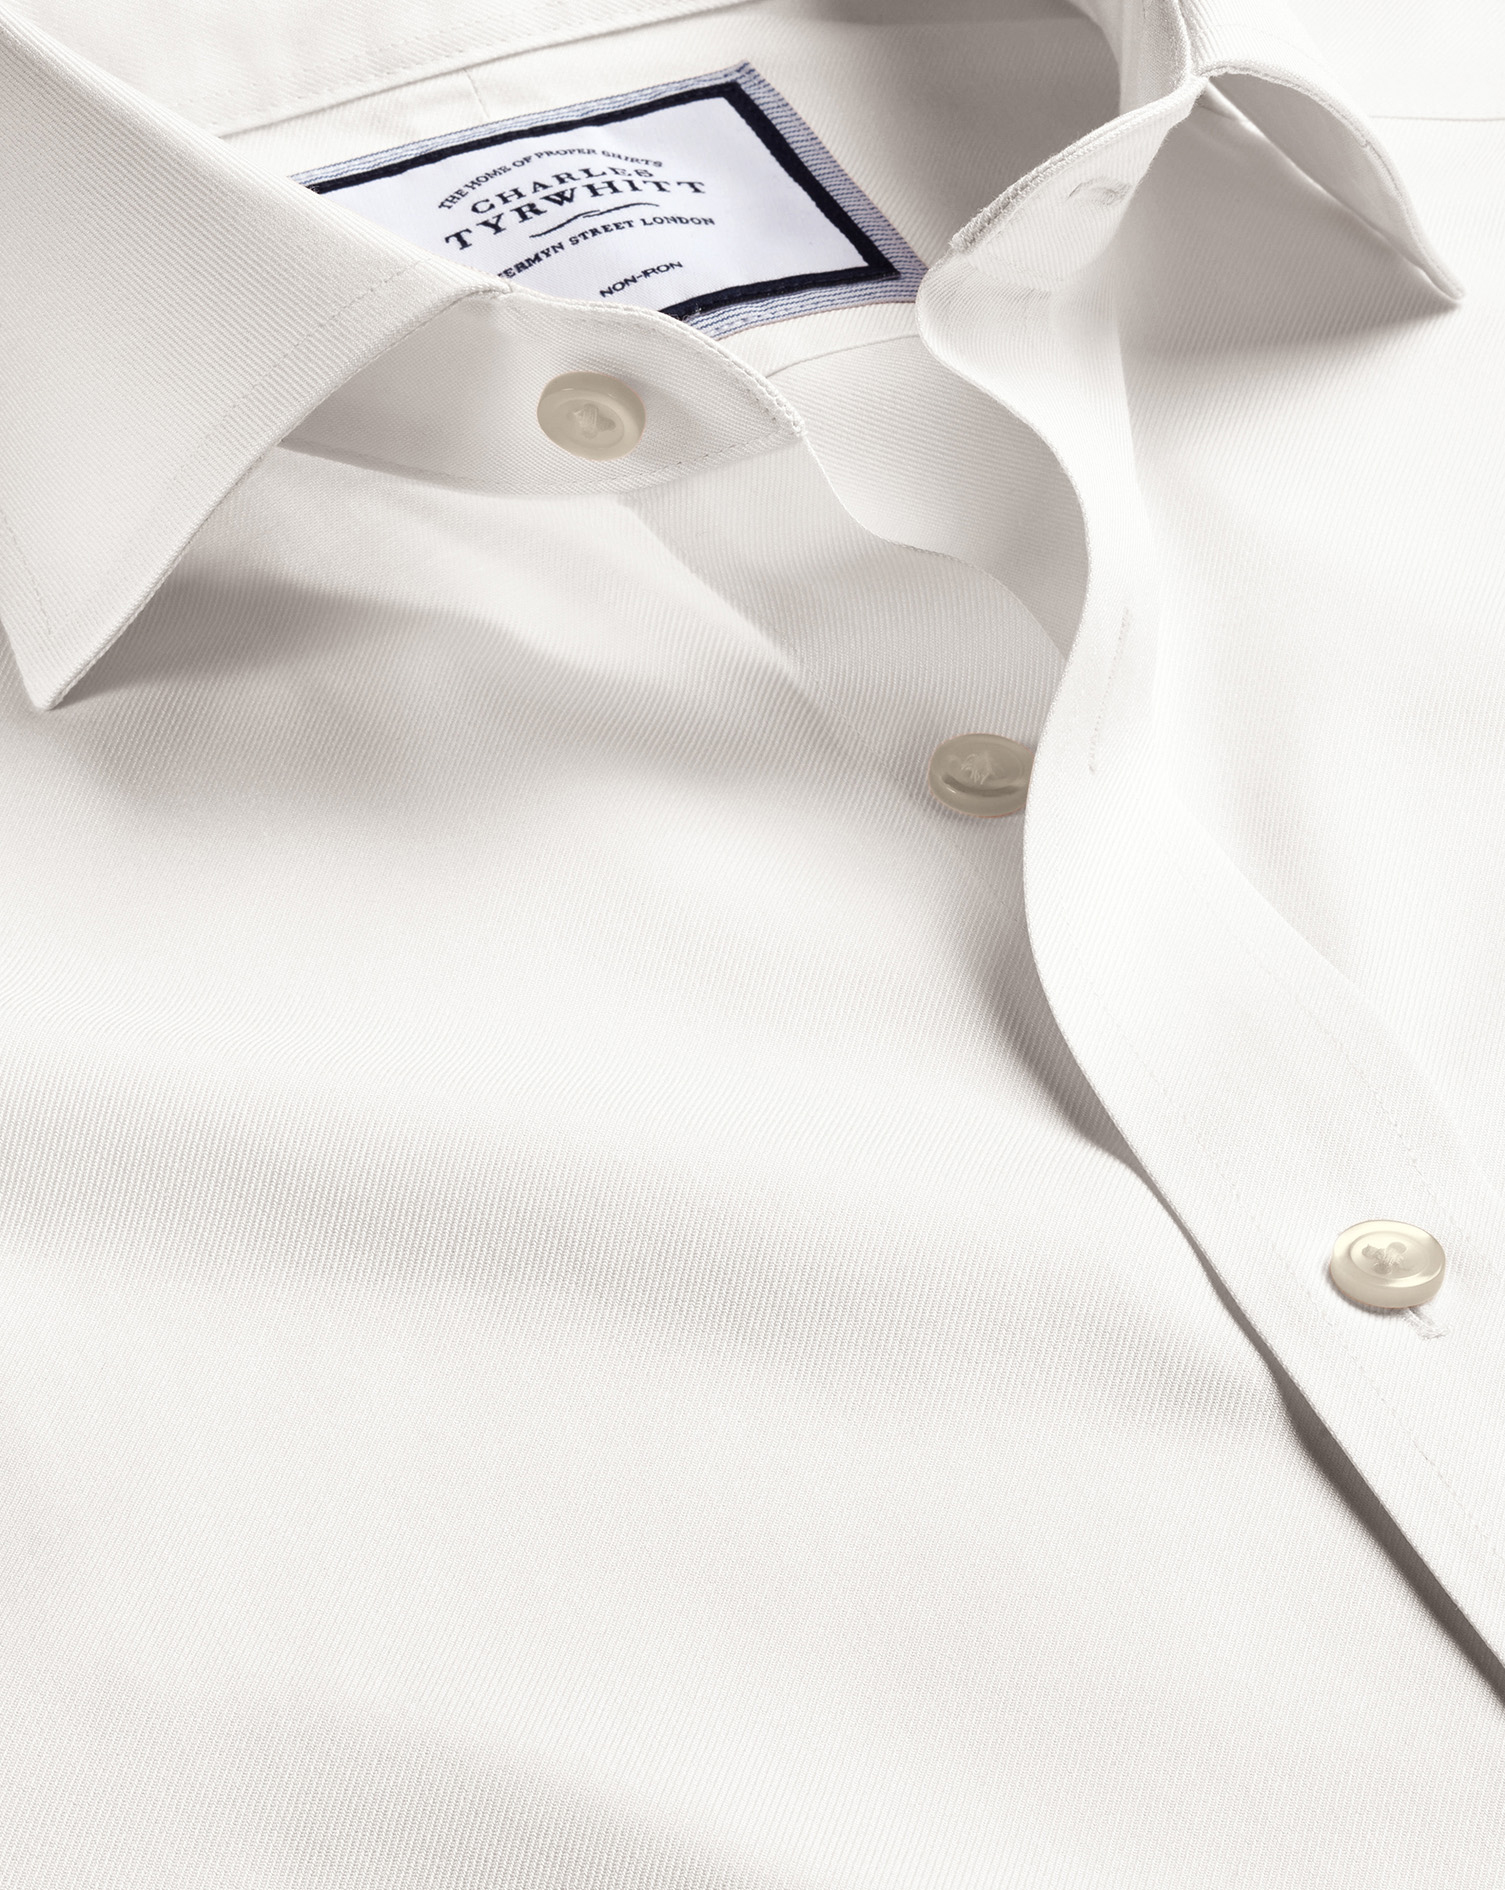 Men's Charles Tyrwhitt Cutaway Collar Non-Iron Twill Dress Shirt - Ivory White French Cuff Size XL C